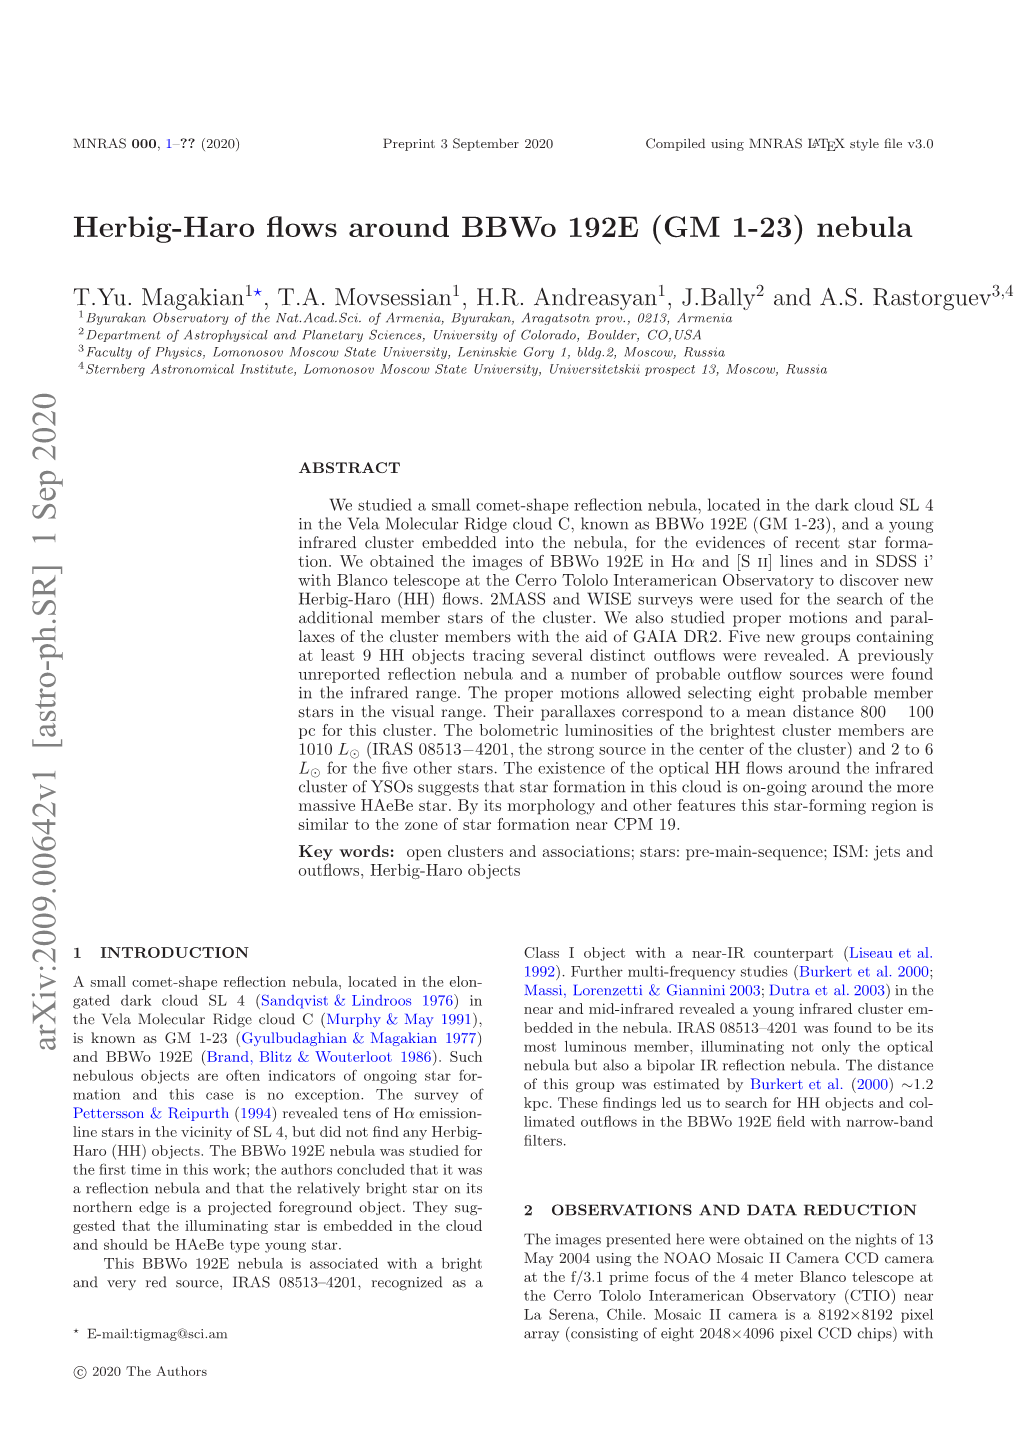 Herbig-Haro Flows Around Bbwo 192E (GM 1-23) Nebula